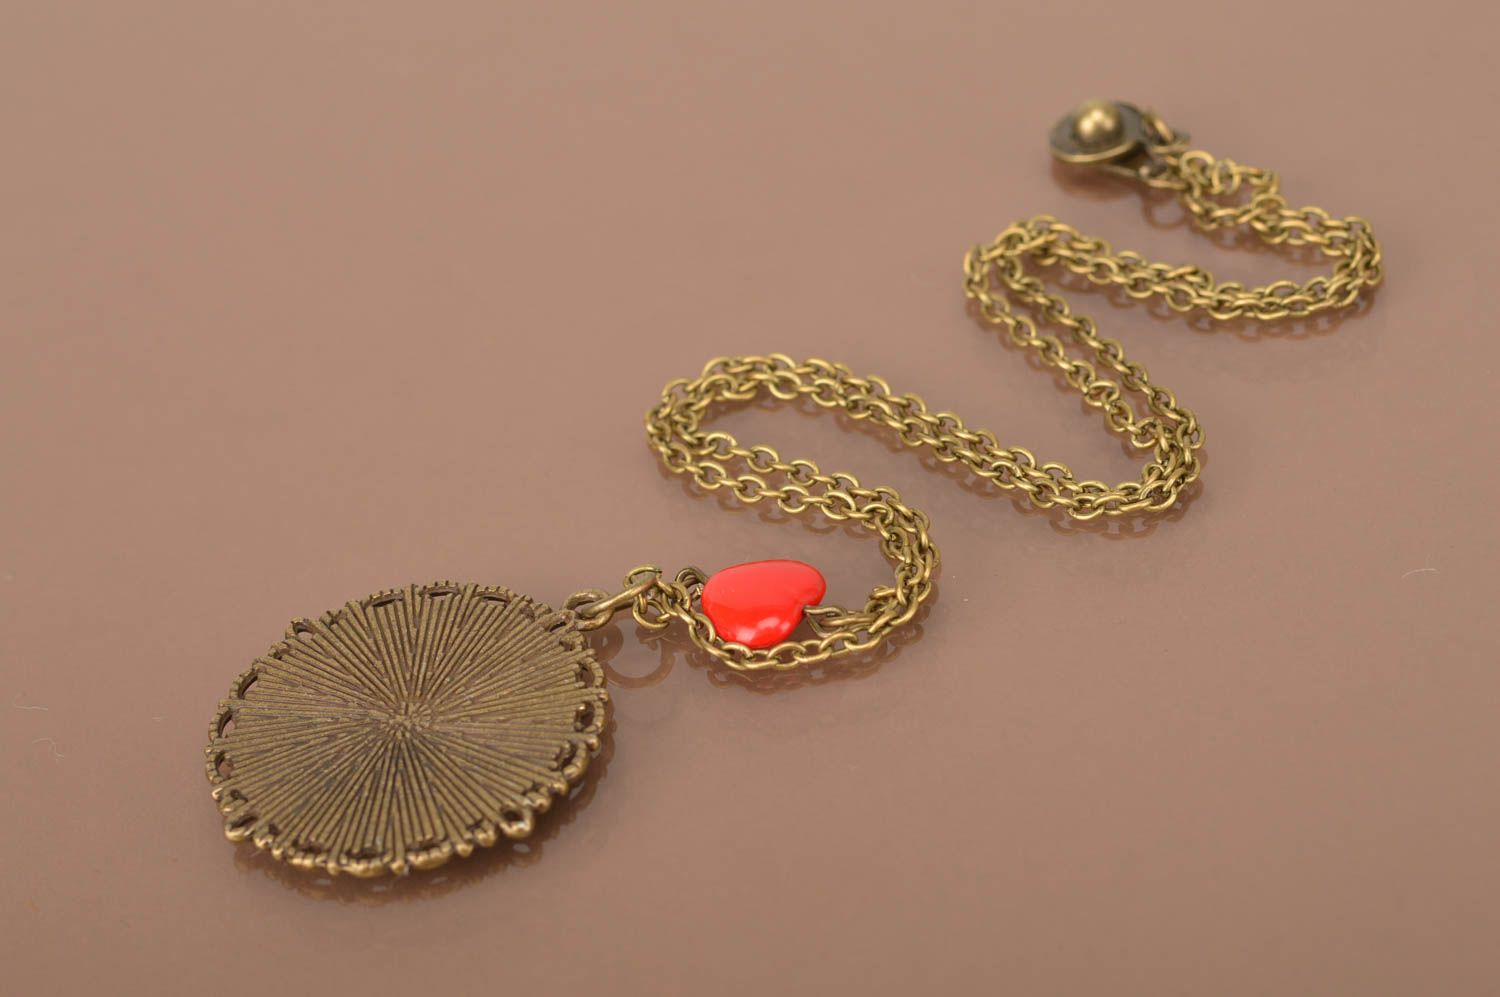 Handmade jewellery pendant necklace chain necklace fashion accessories gift idea photo 5